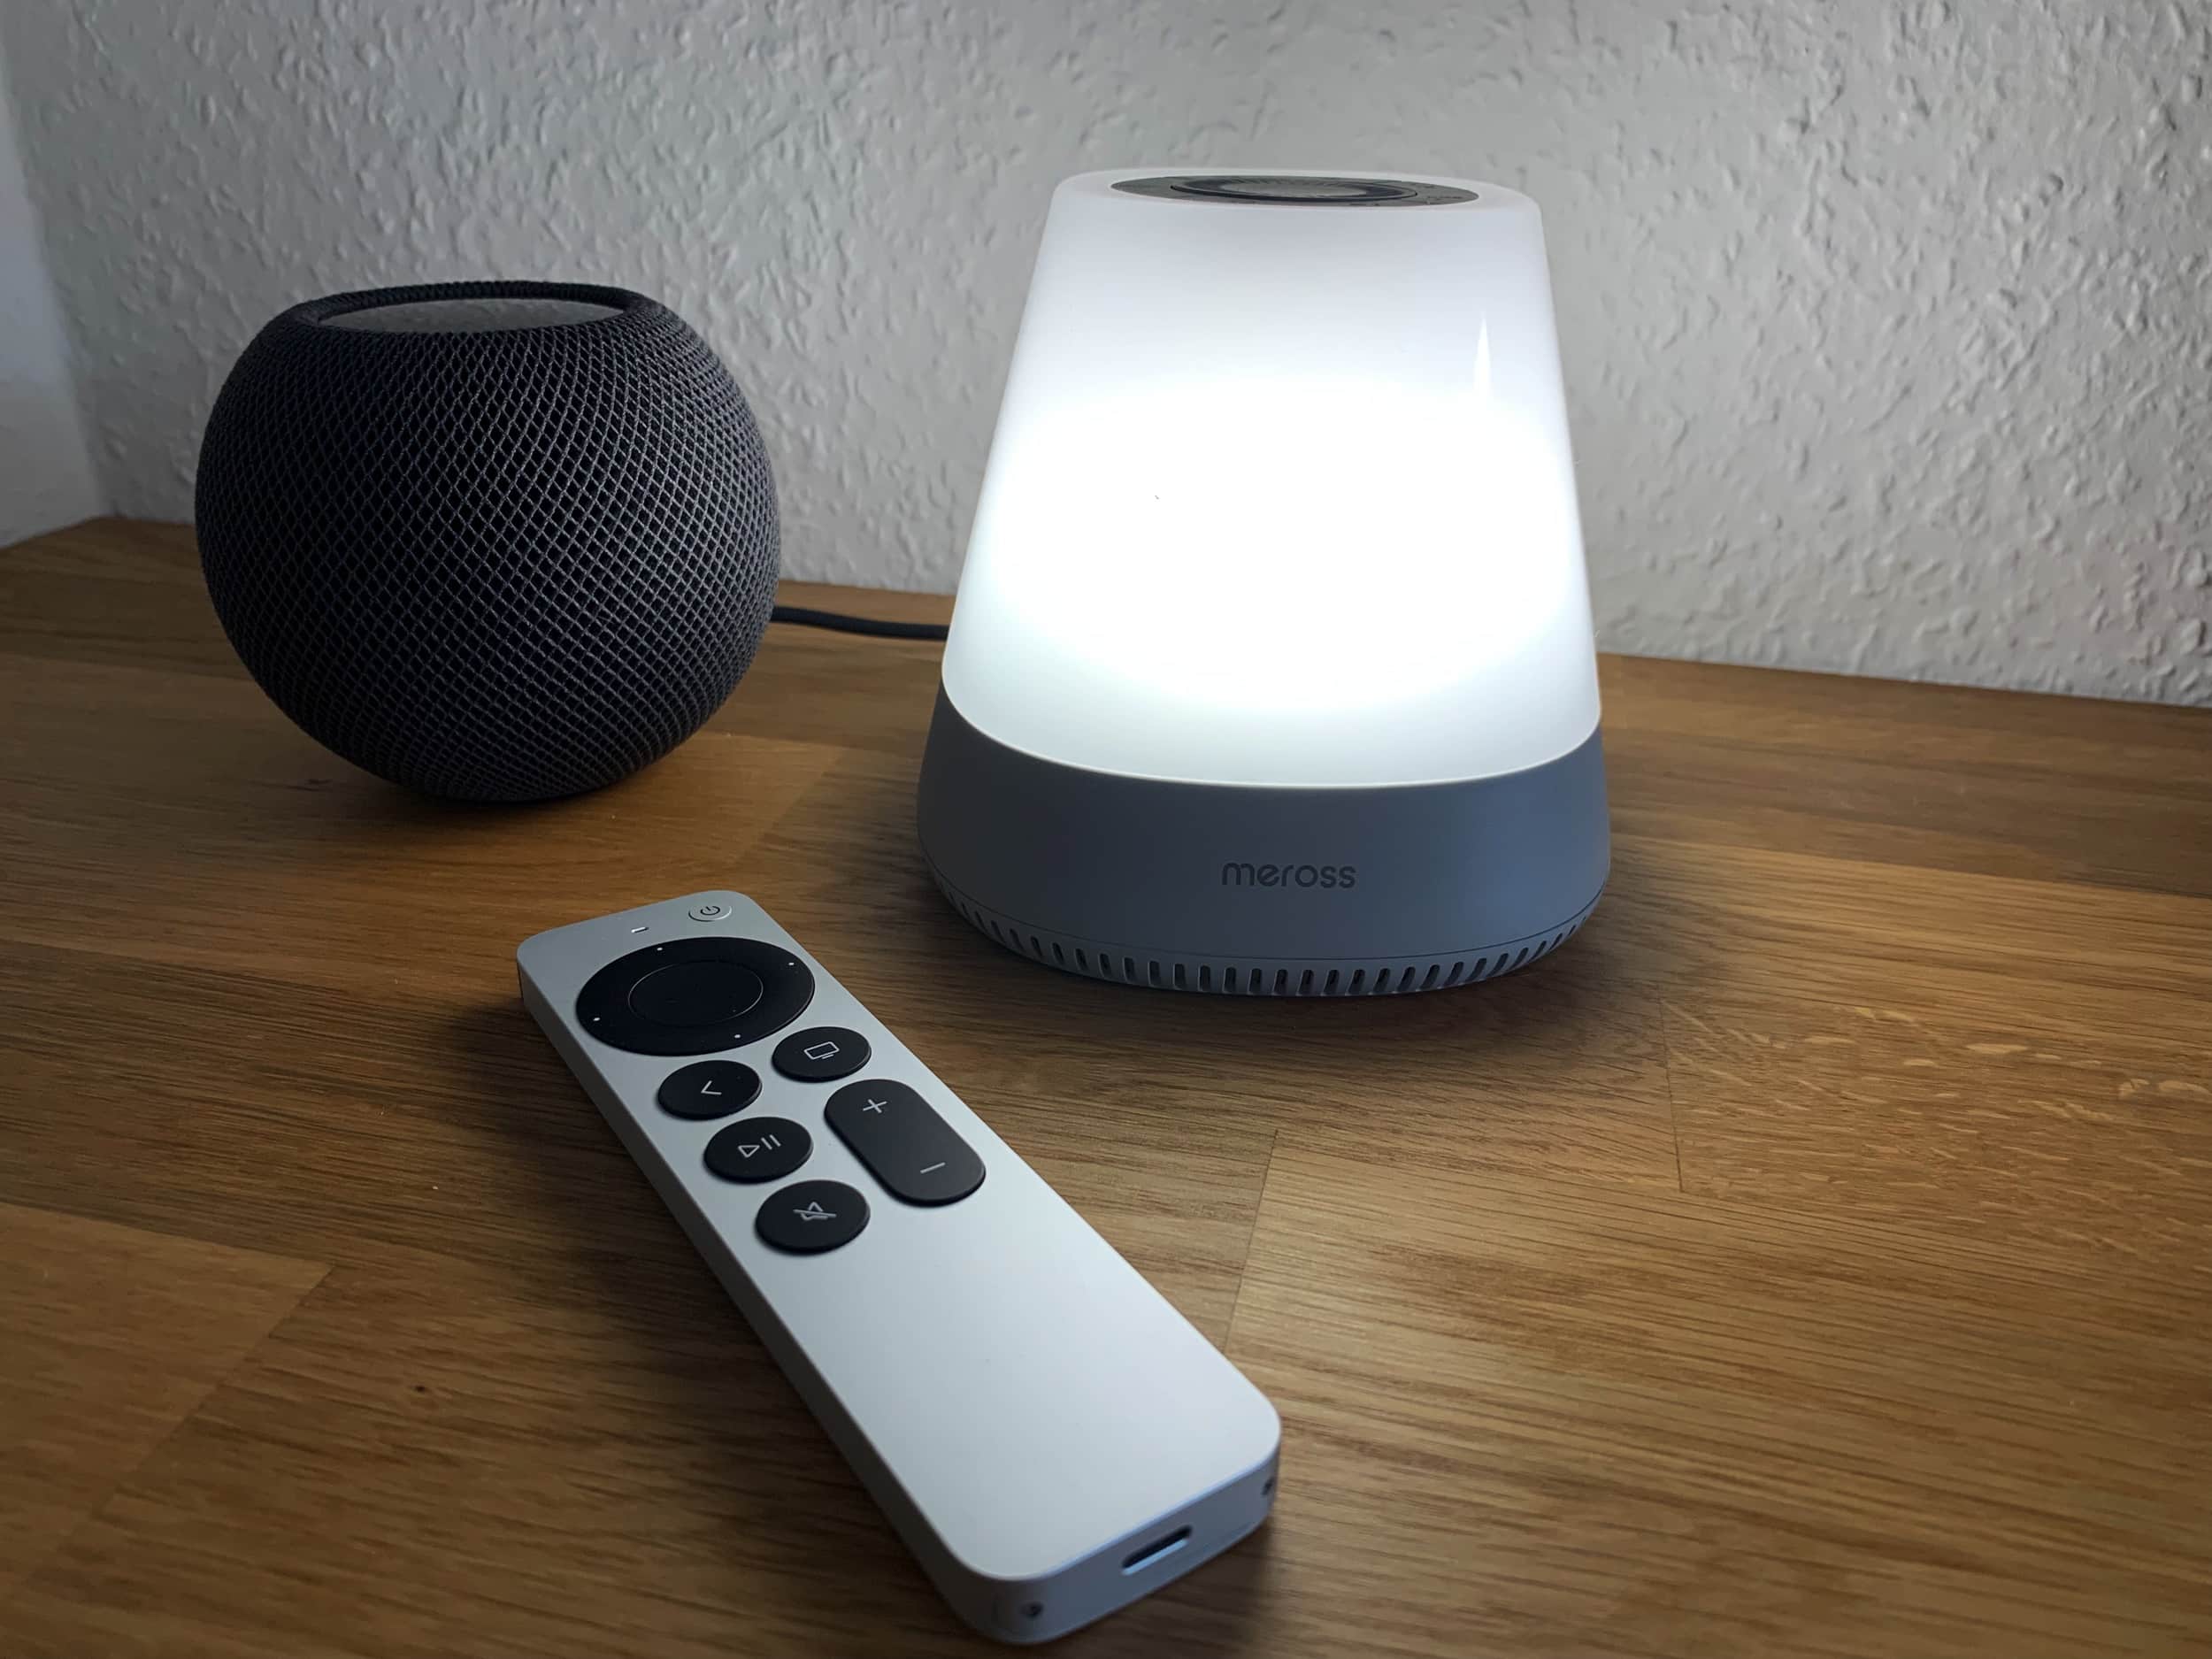 Meross desk lamp with HomeKit review